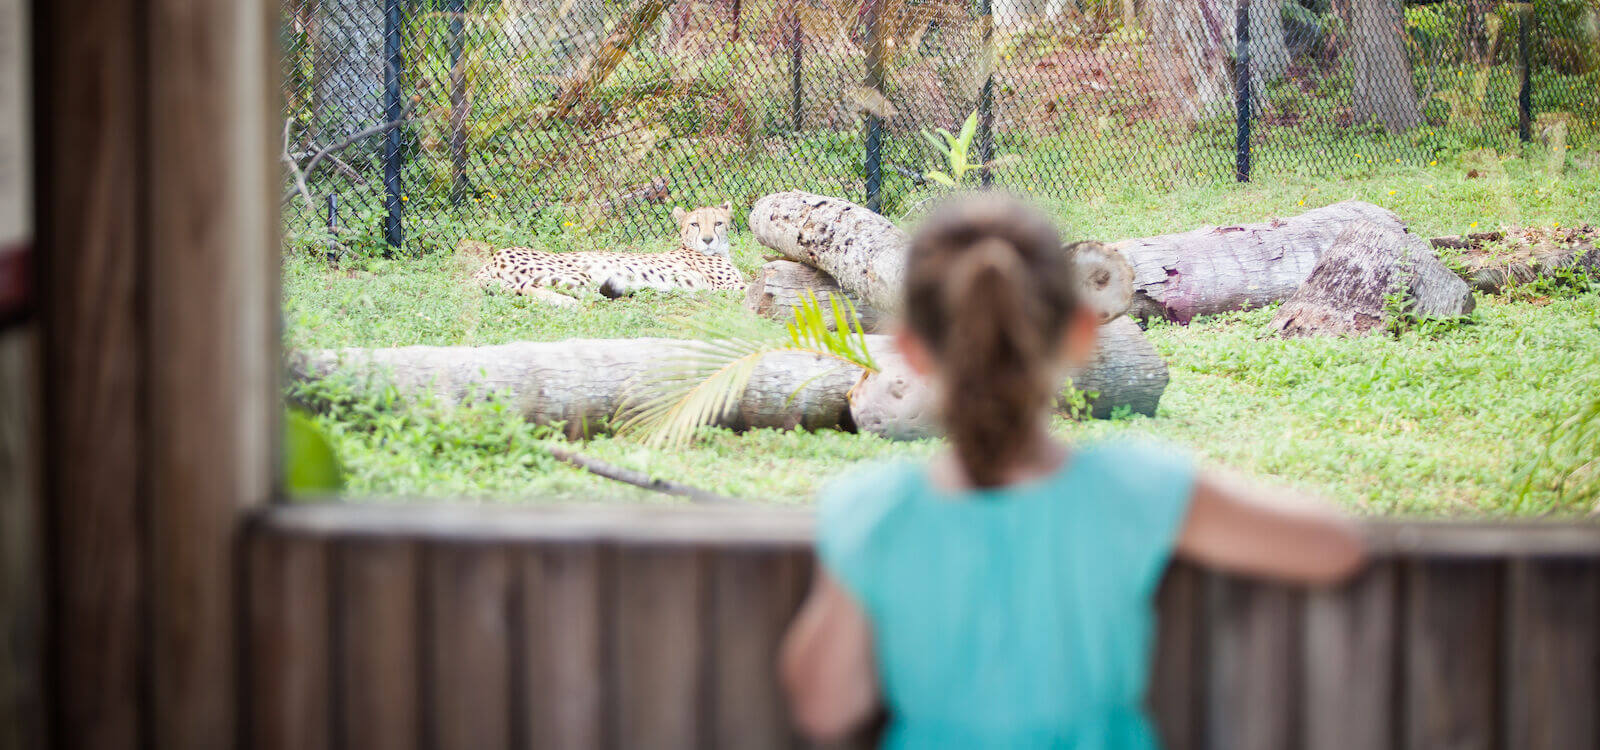 Young child looking at a cheetah at the Naples Zoo family fun activities Naples, Florida